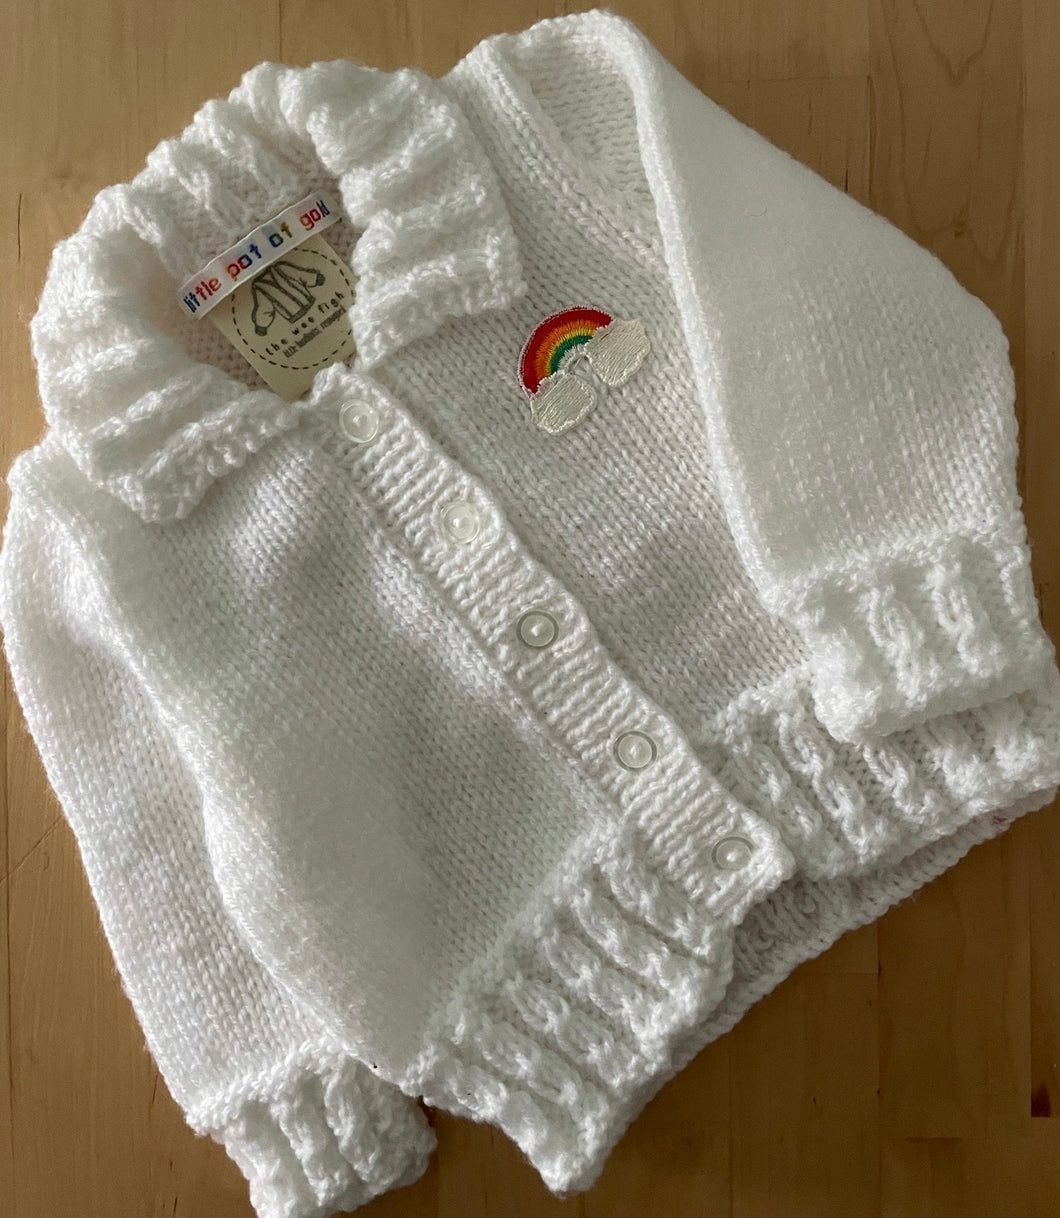 0-3 months - White collared rainbow cardigan